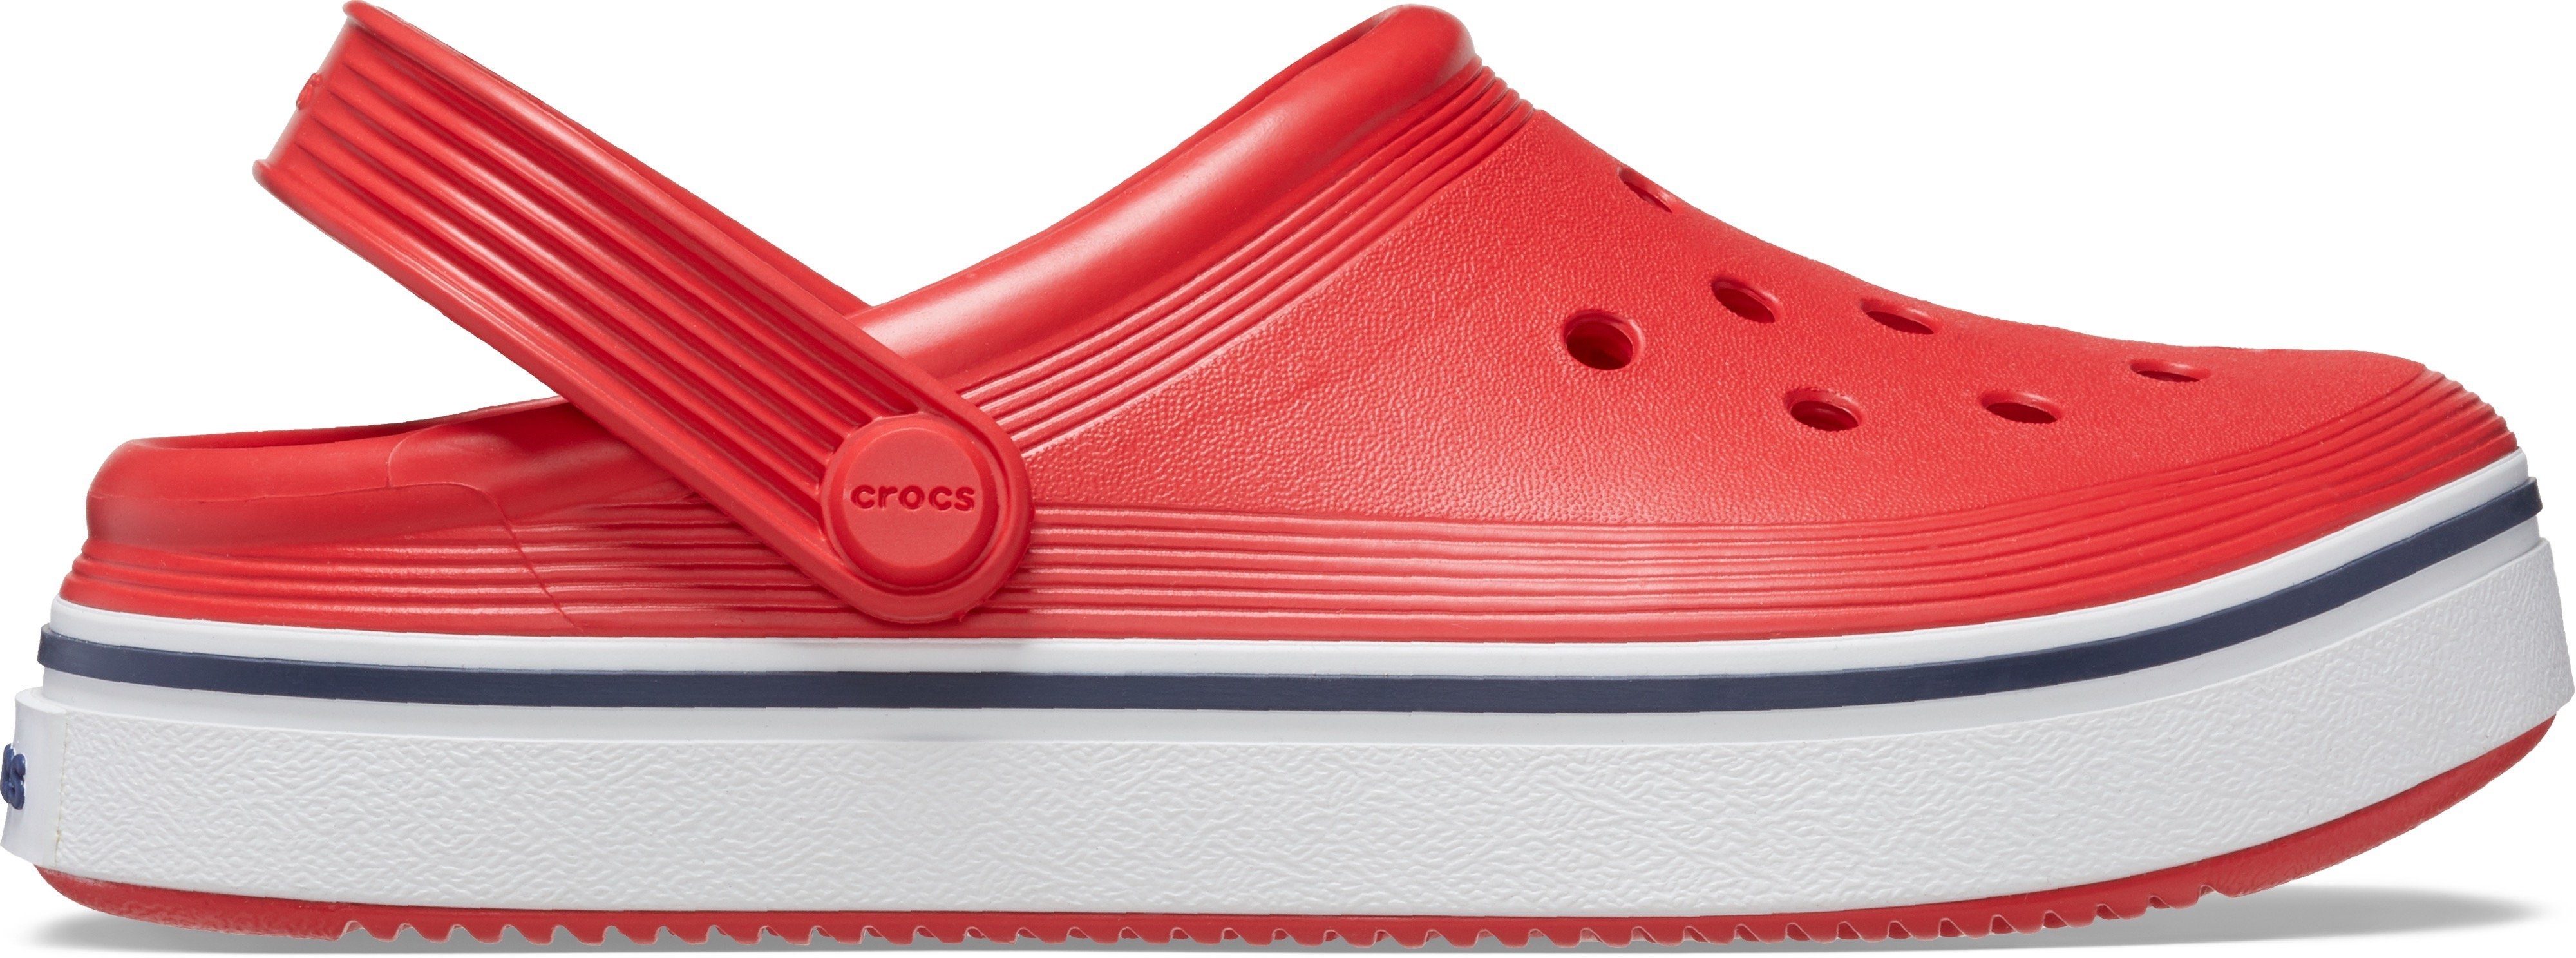 coolem Clog Crocs Farbeinsatz Clean K Clog mit Crocband rot